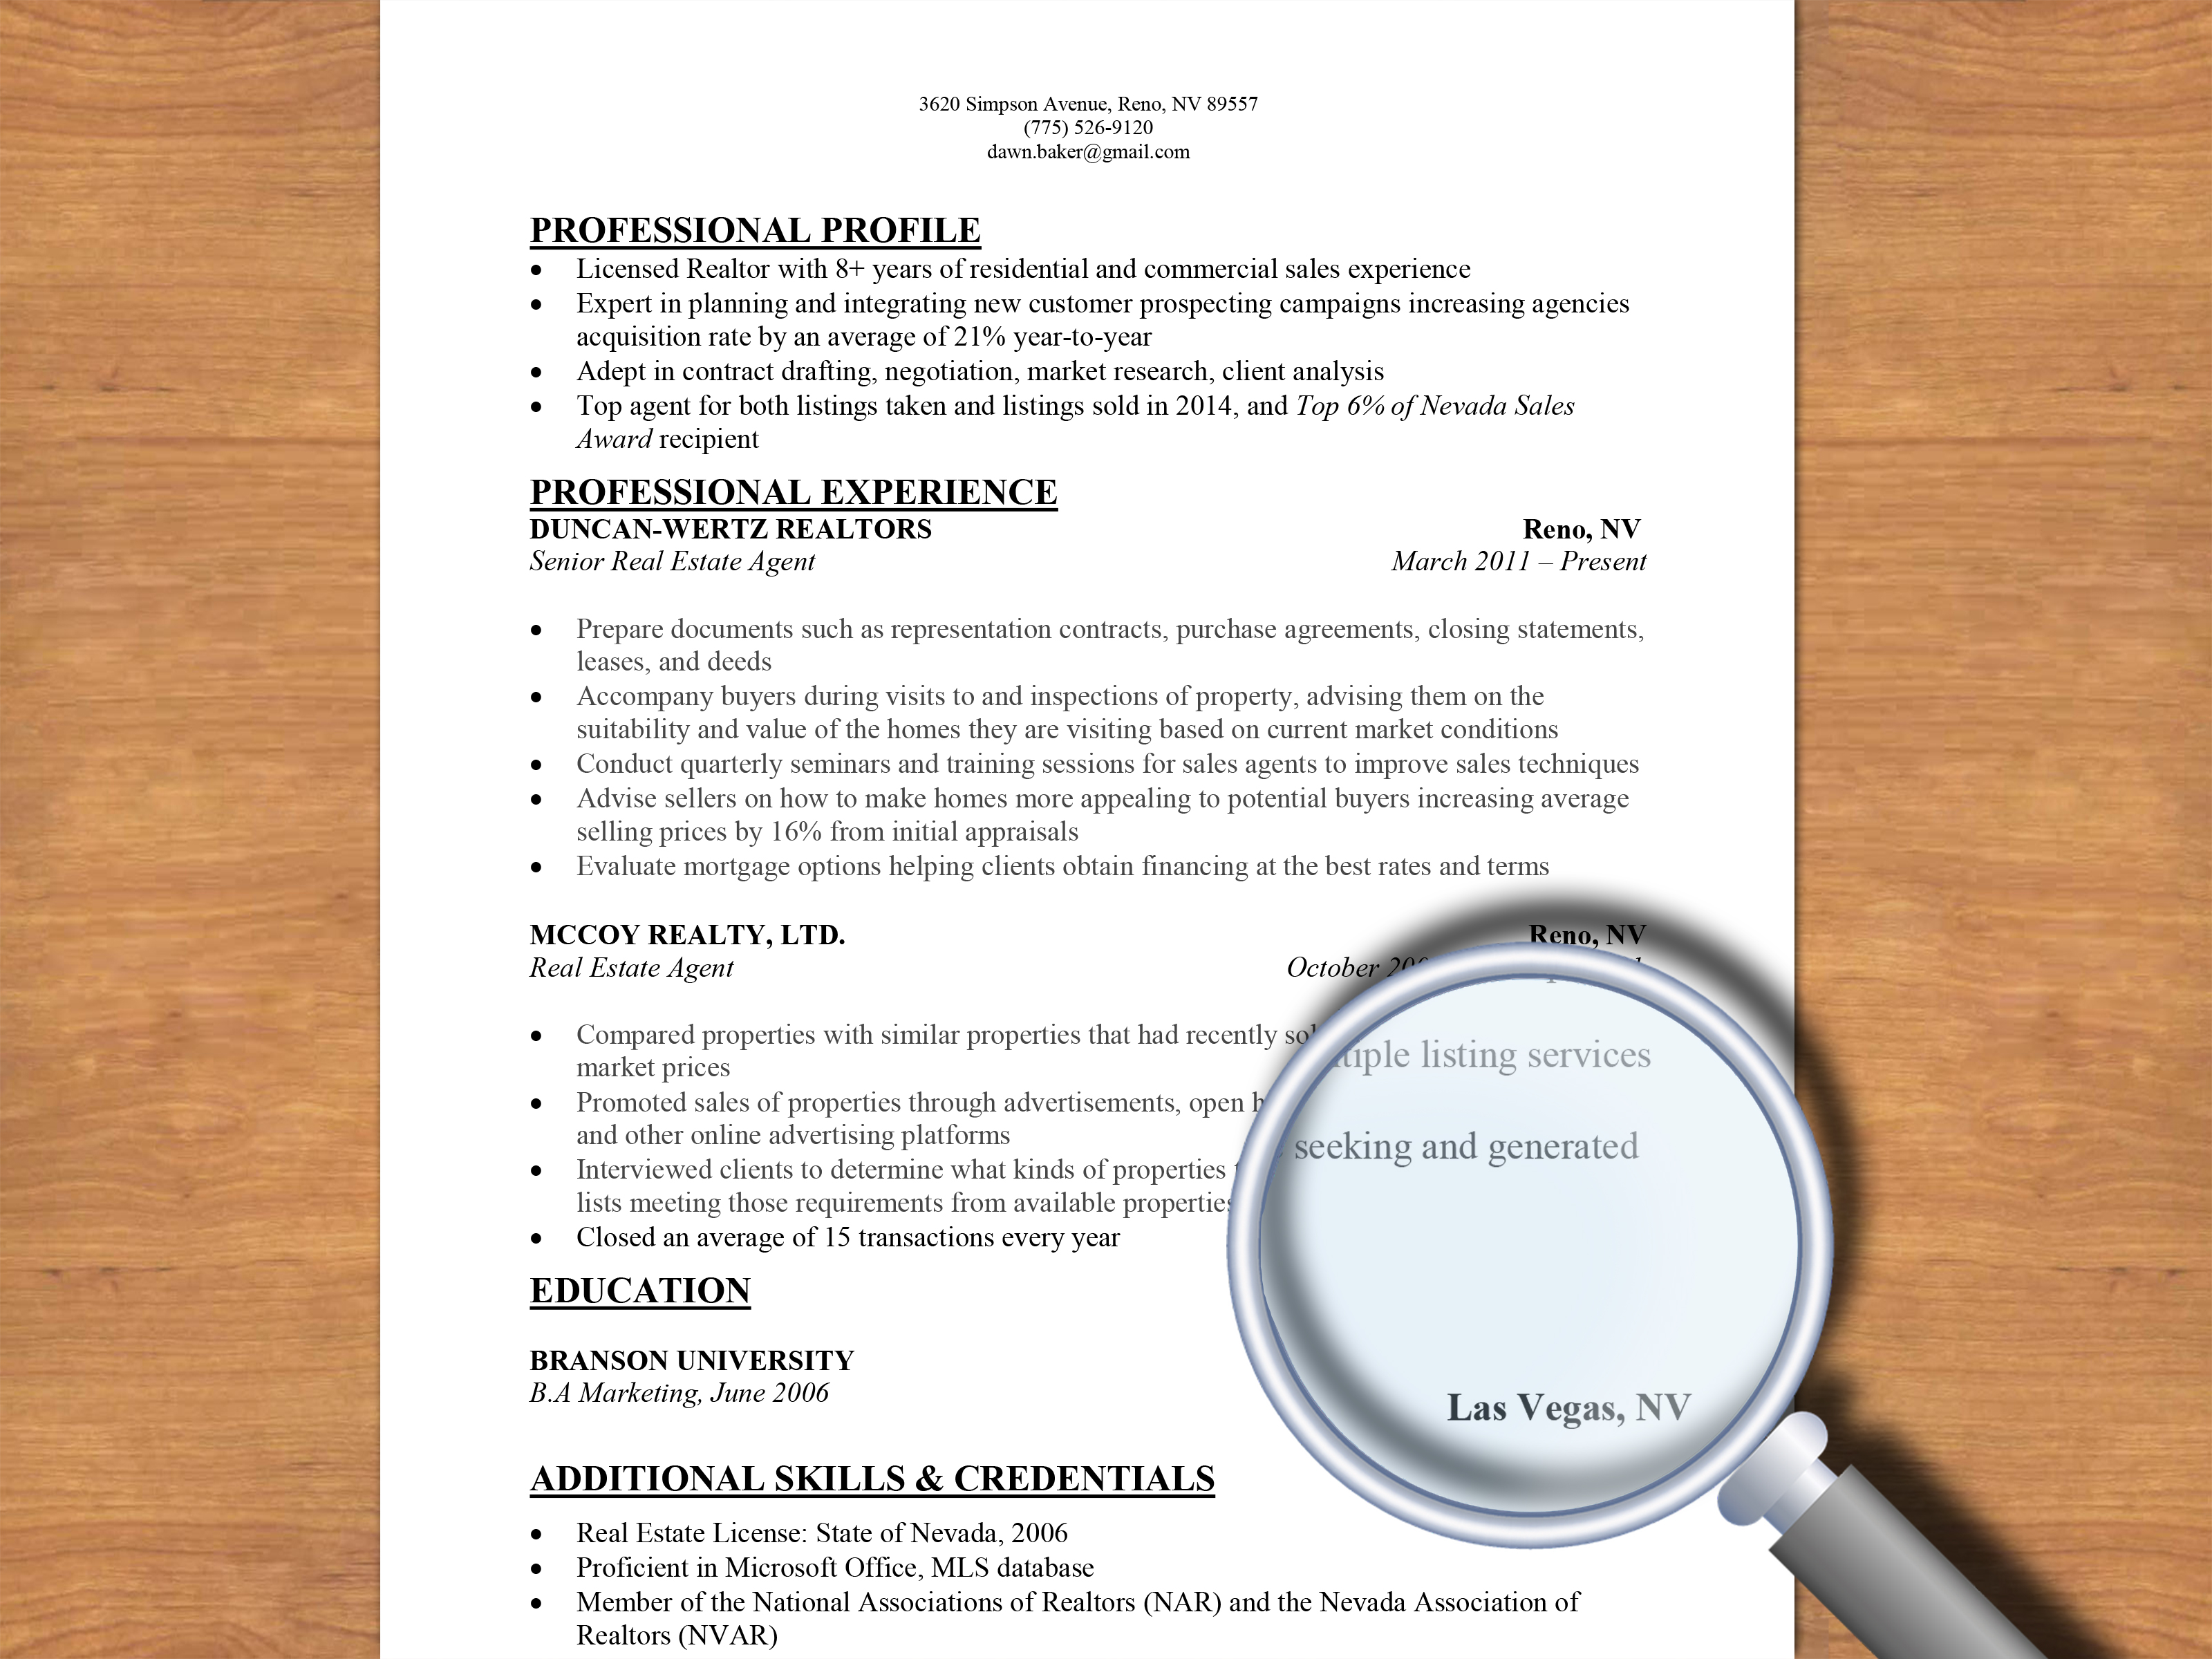 How To Write A Resume For A Job Write A Resume For A Real Estate Job Step 13 how to write a resume for a job|wikiresume.com